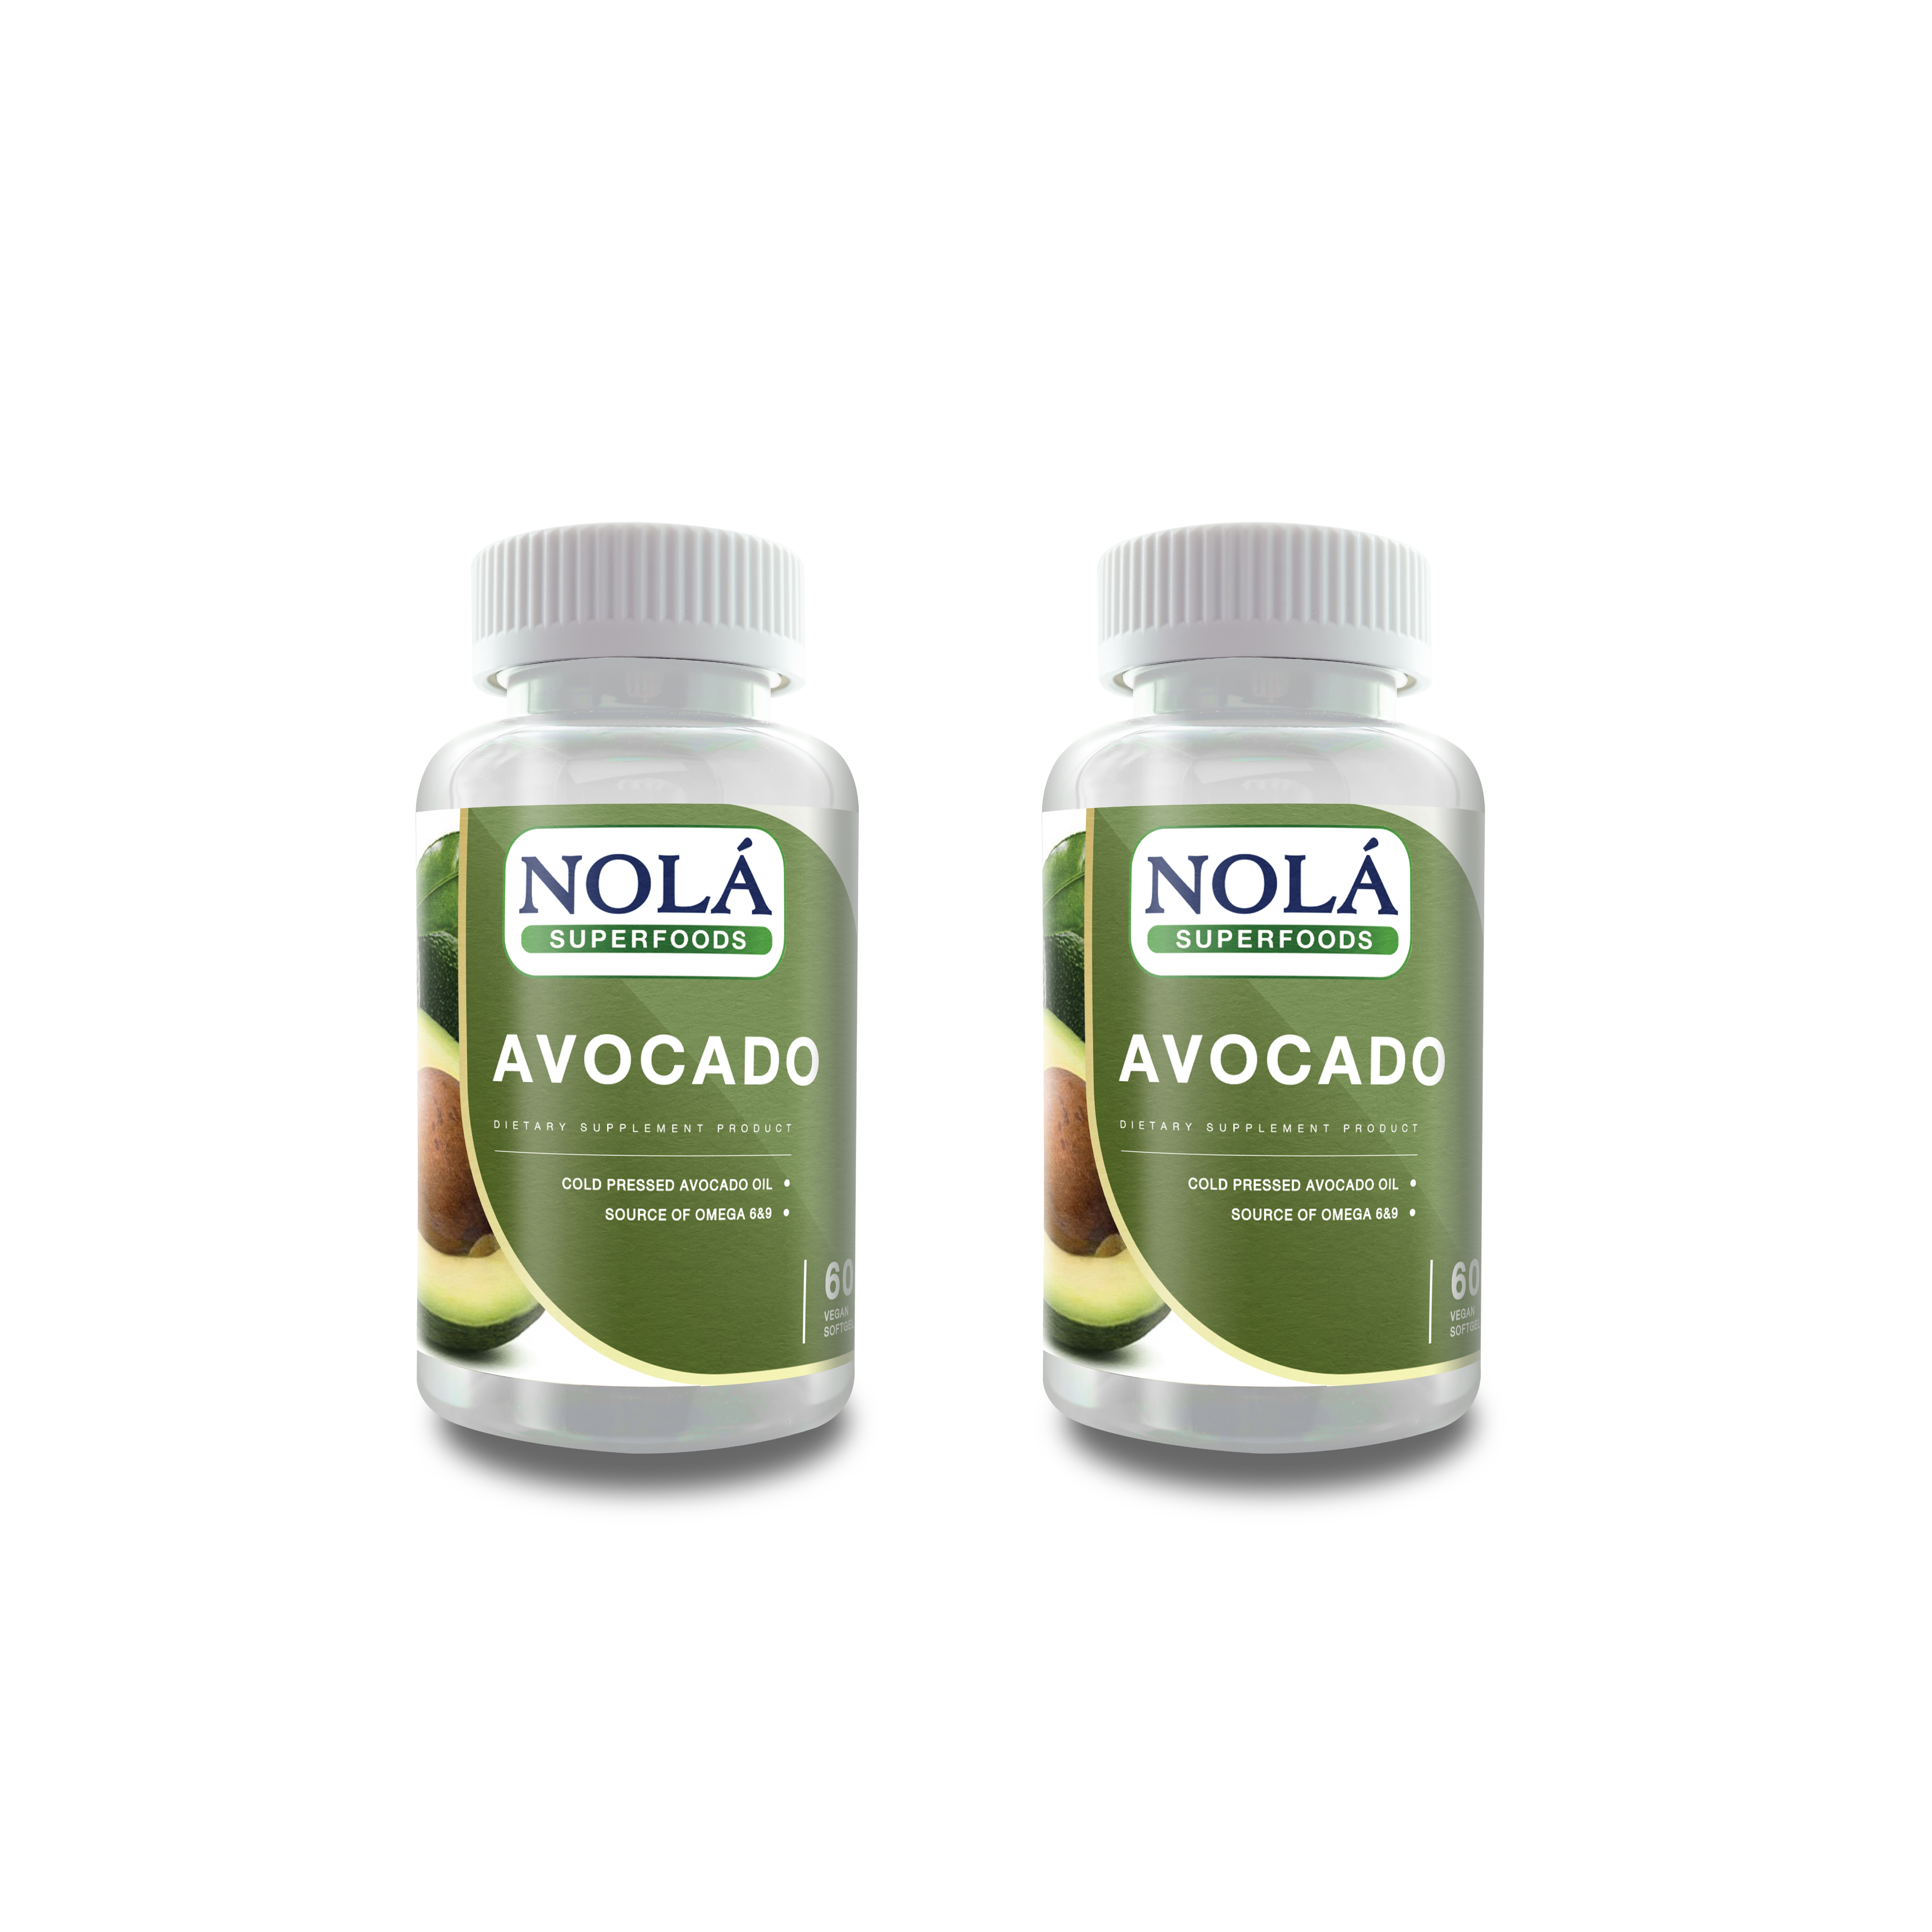 NOLA Avocado 60 vegan soft gels ( 2 bottles)